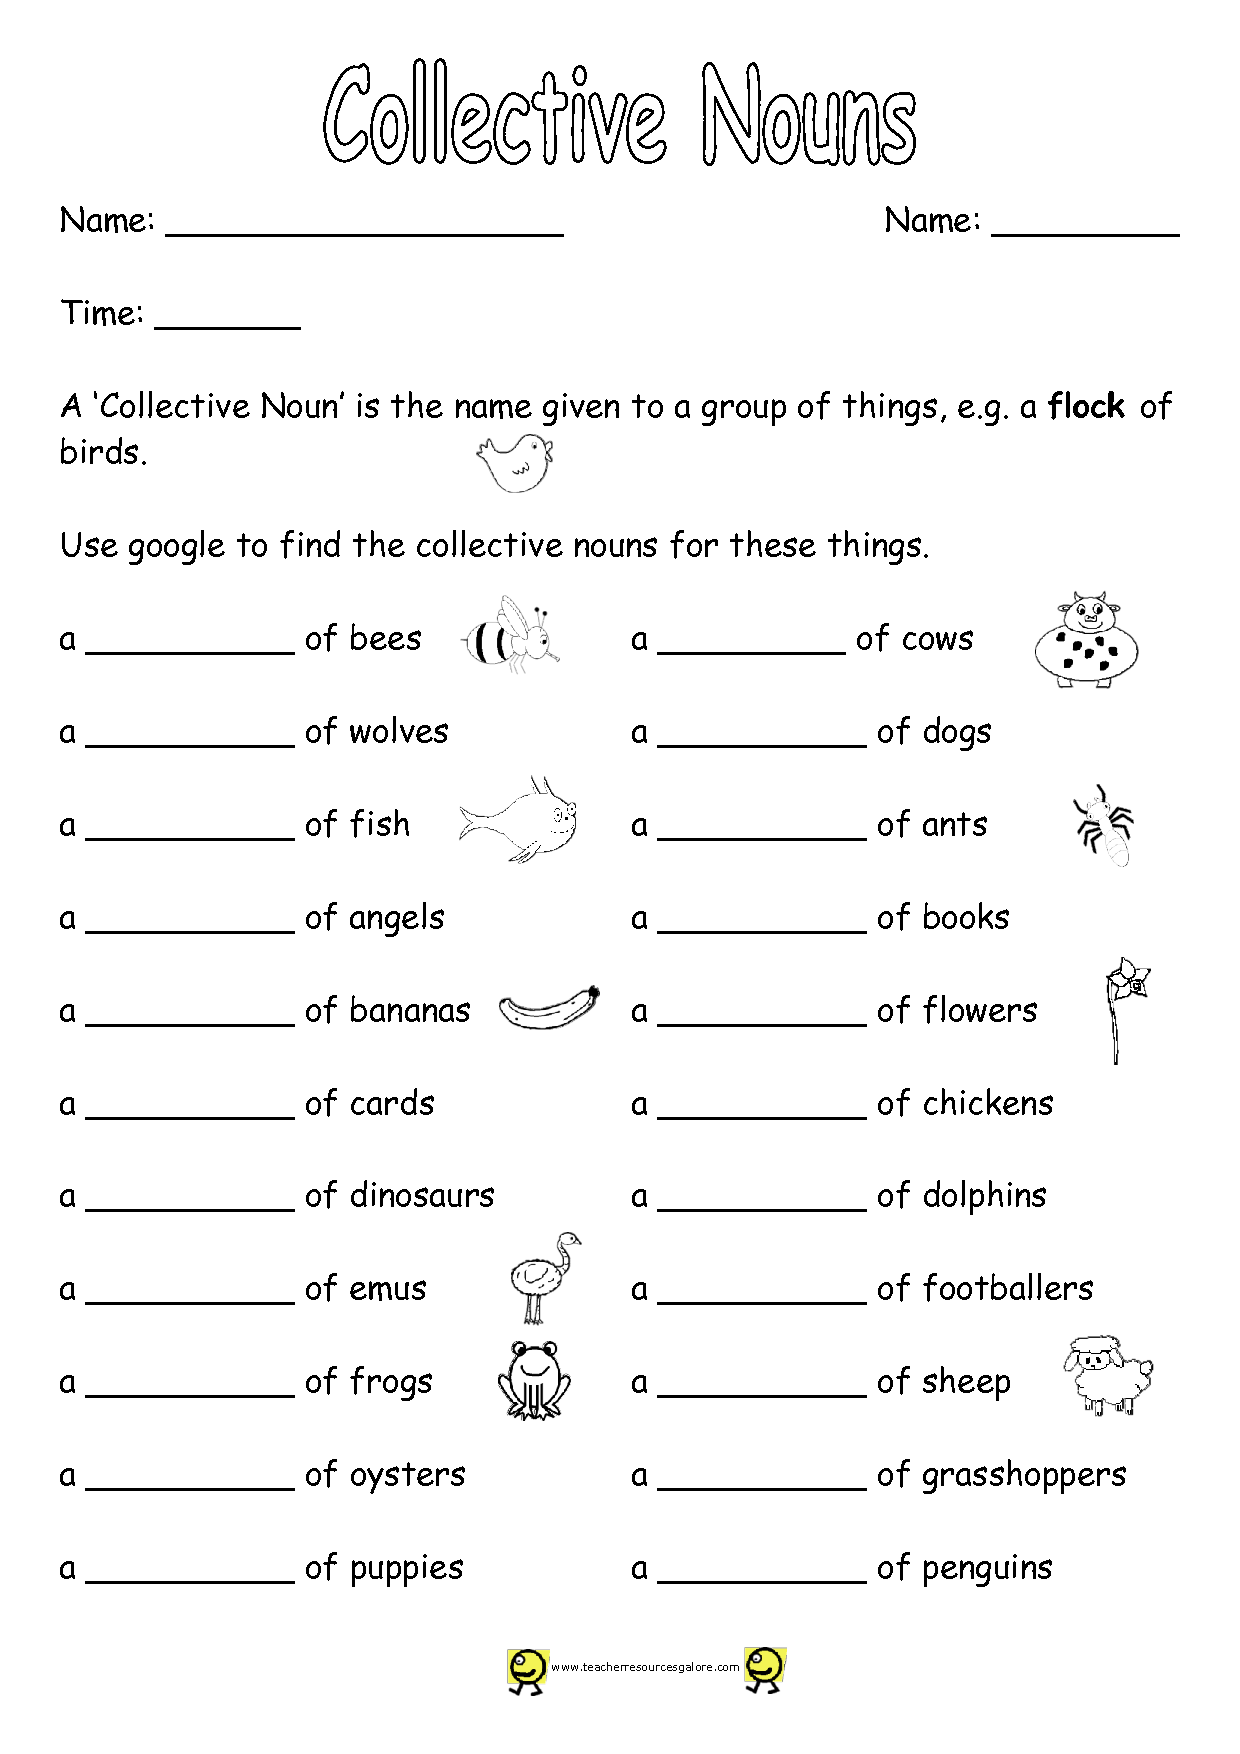 15-nouns-coloring-worksheets-printable-worksheeto